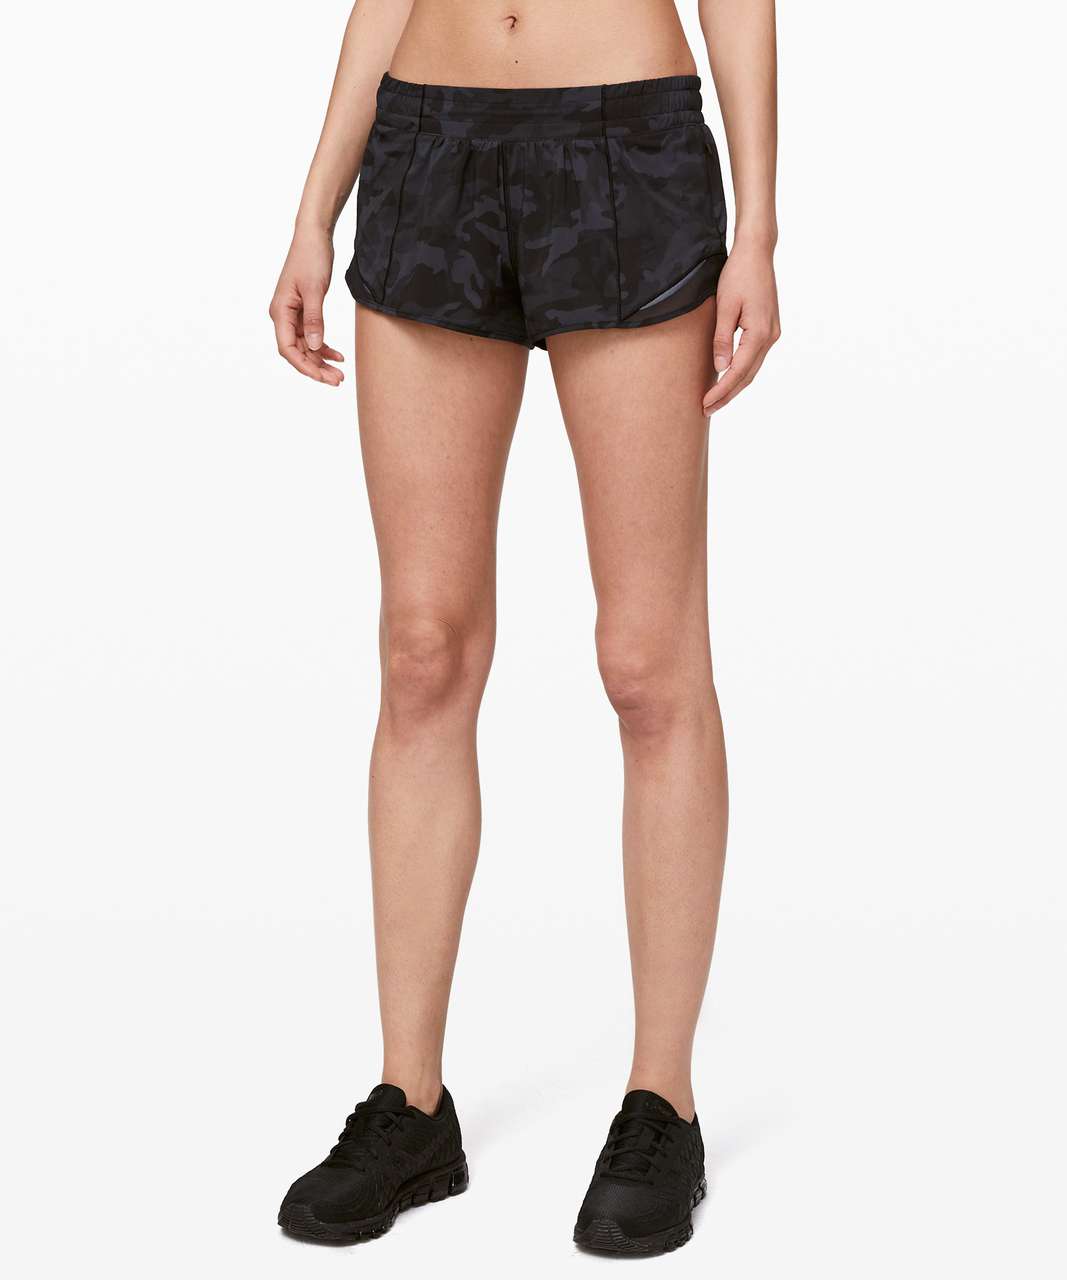 wholesale online Lululemon Black Hottie Hot shorts Size 2, Inseam